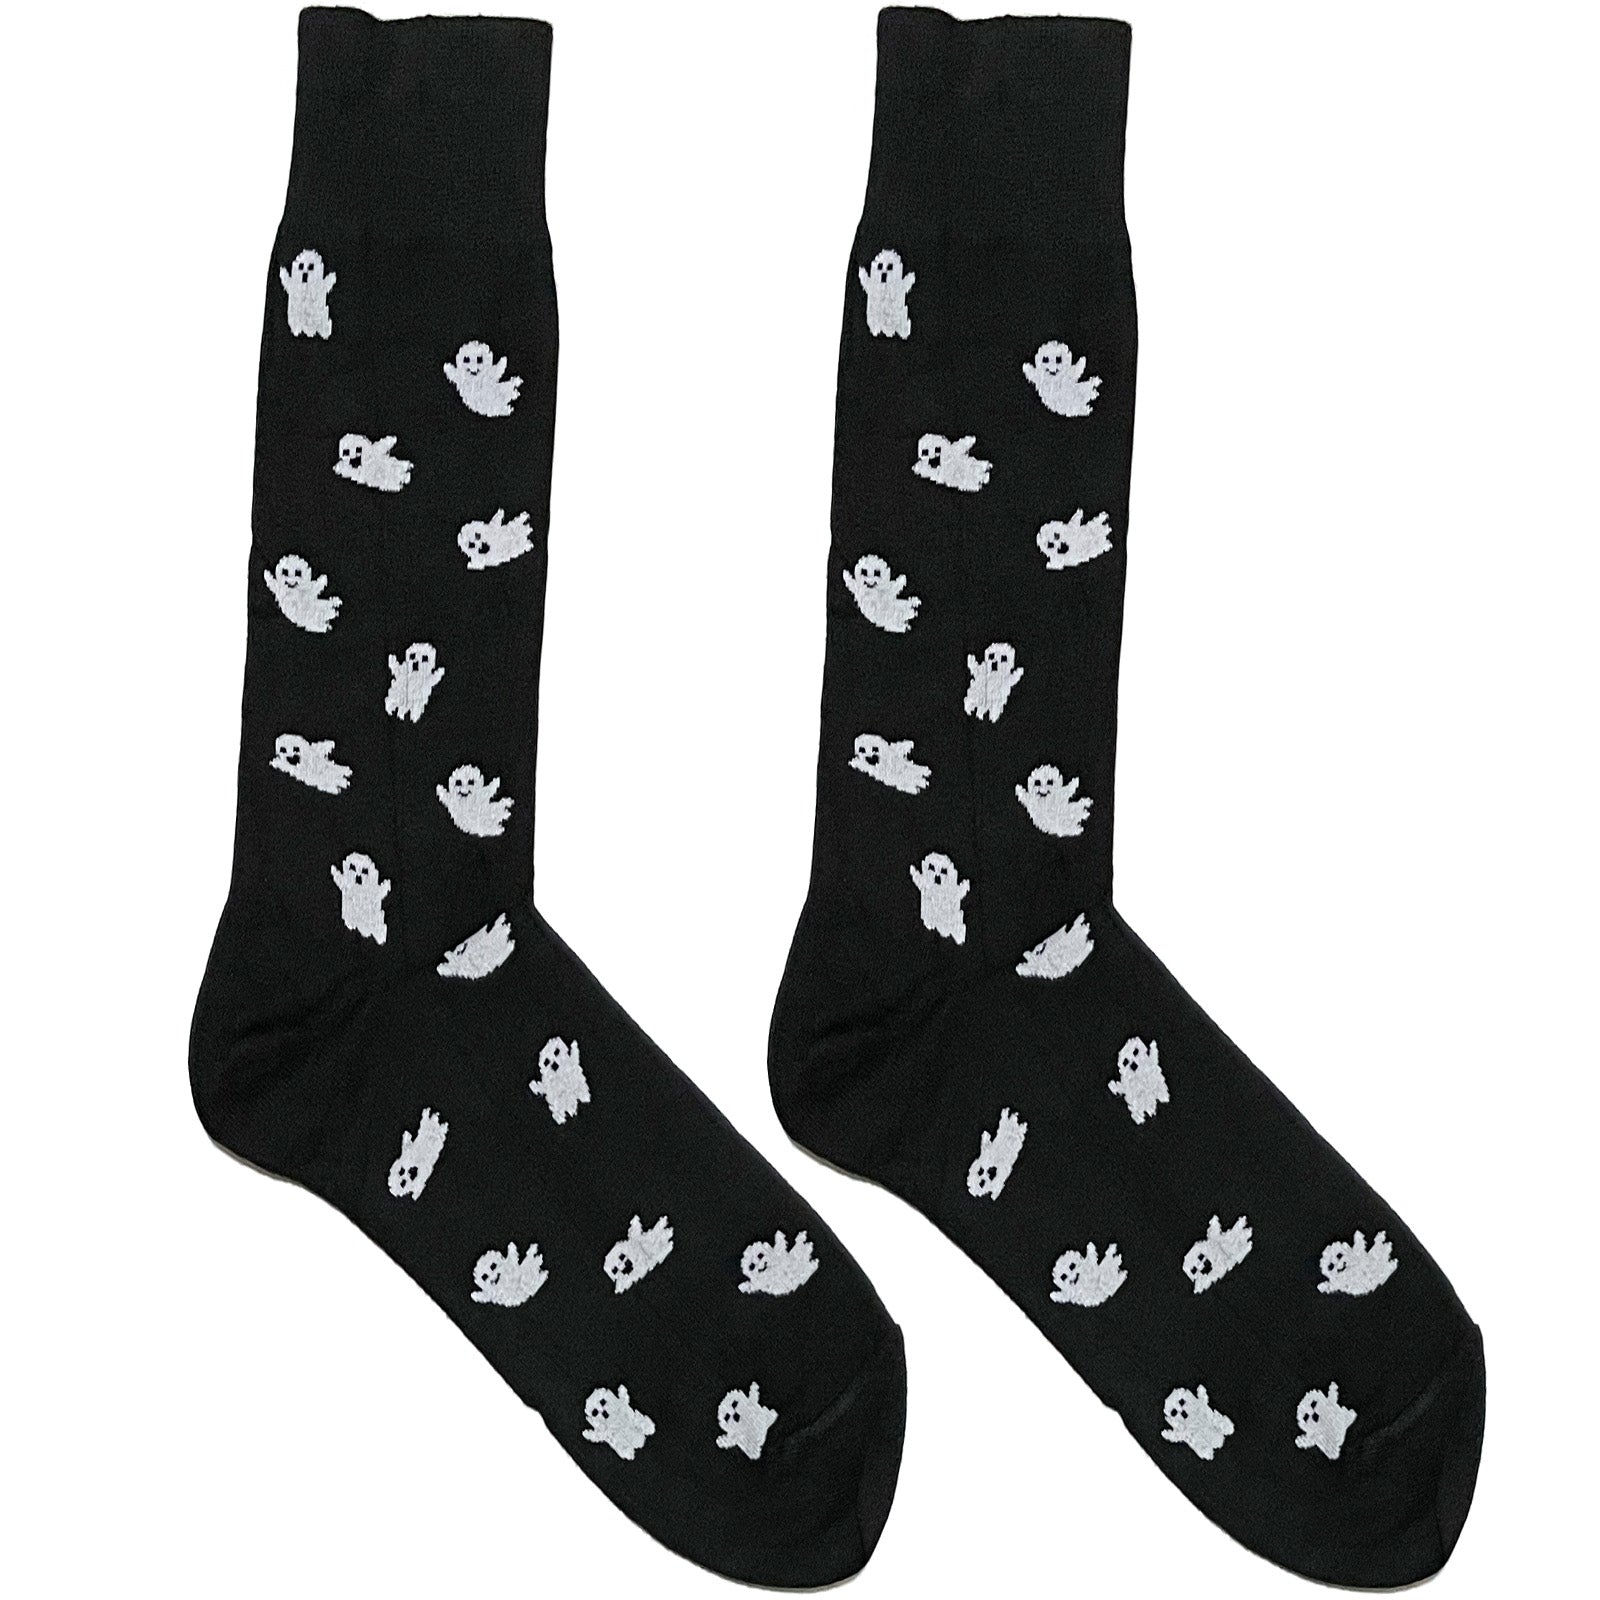 Black And White Ghost Socks